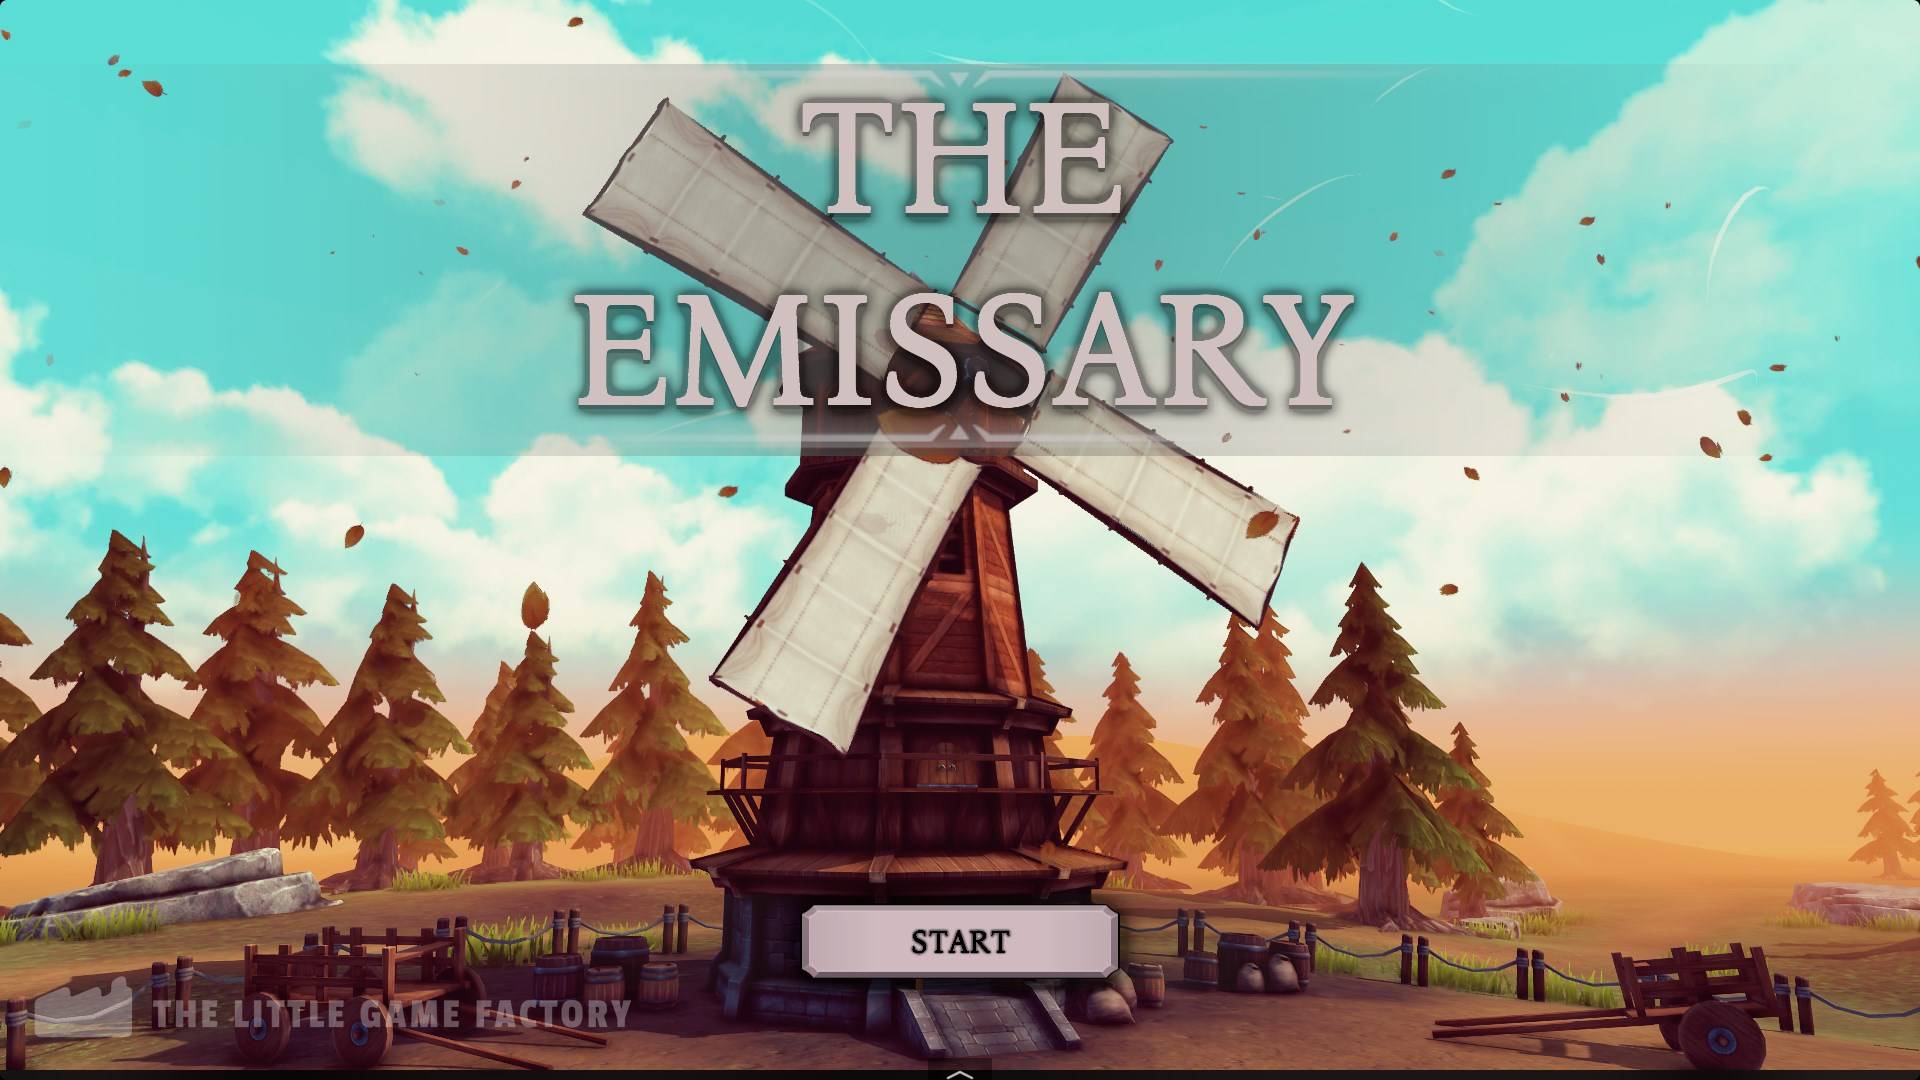 The Emissary - Screenshot 1 | Unity WebGL Mobile game | Play WebGL games on thelittlegamefactory.com and supergoodgames.com